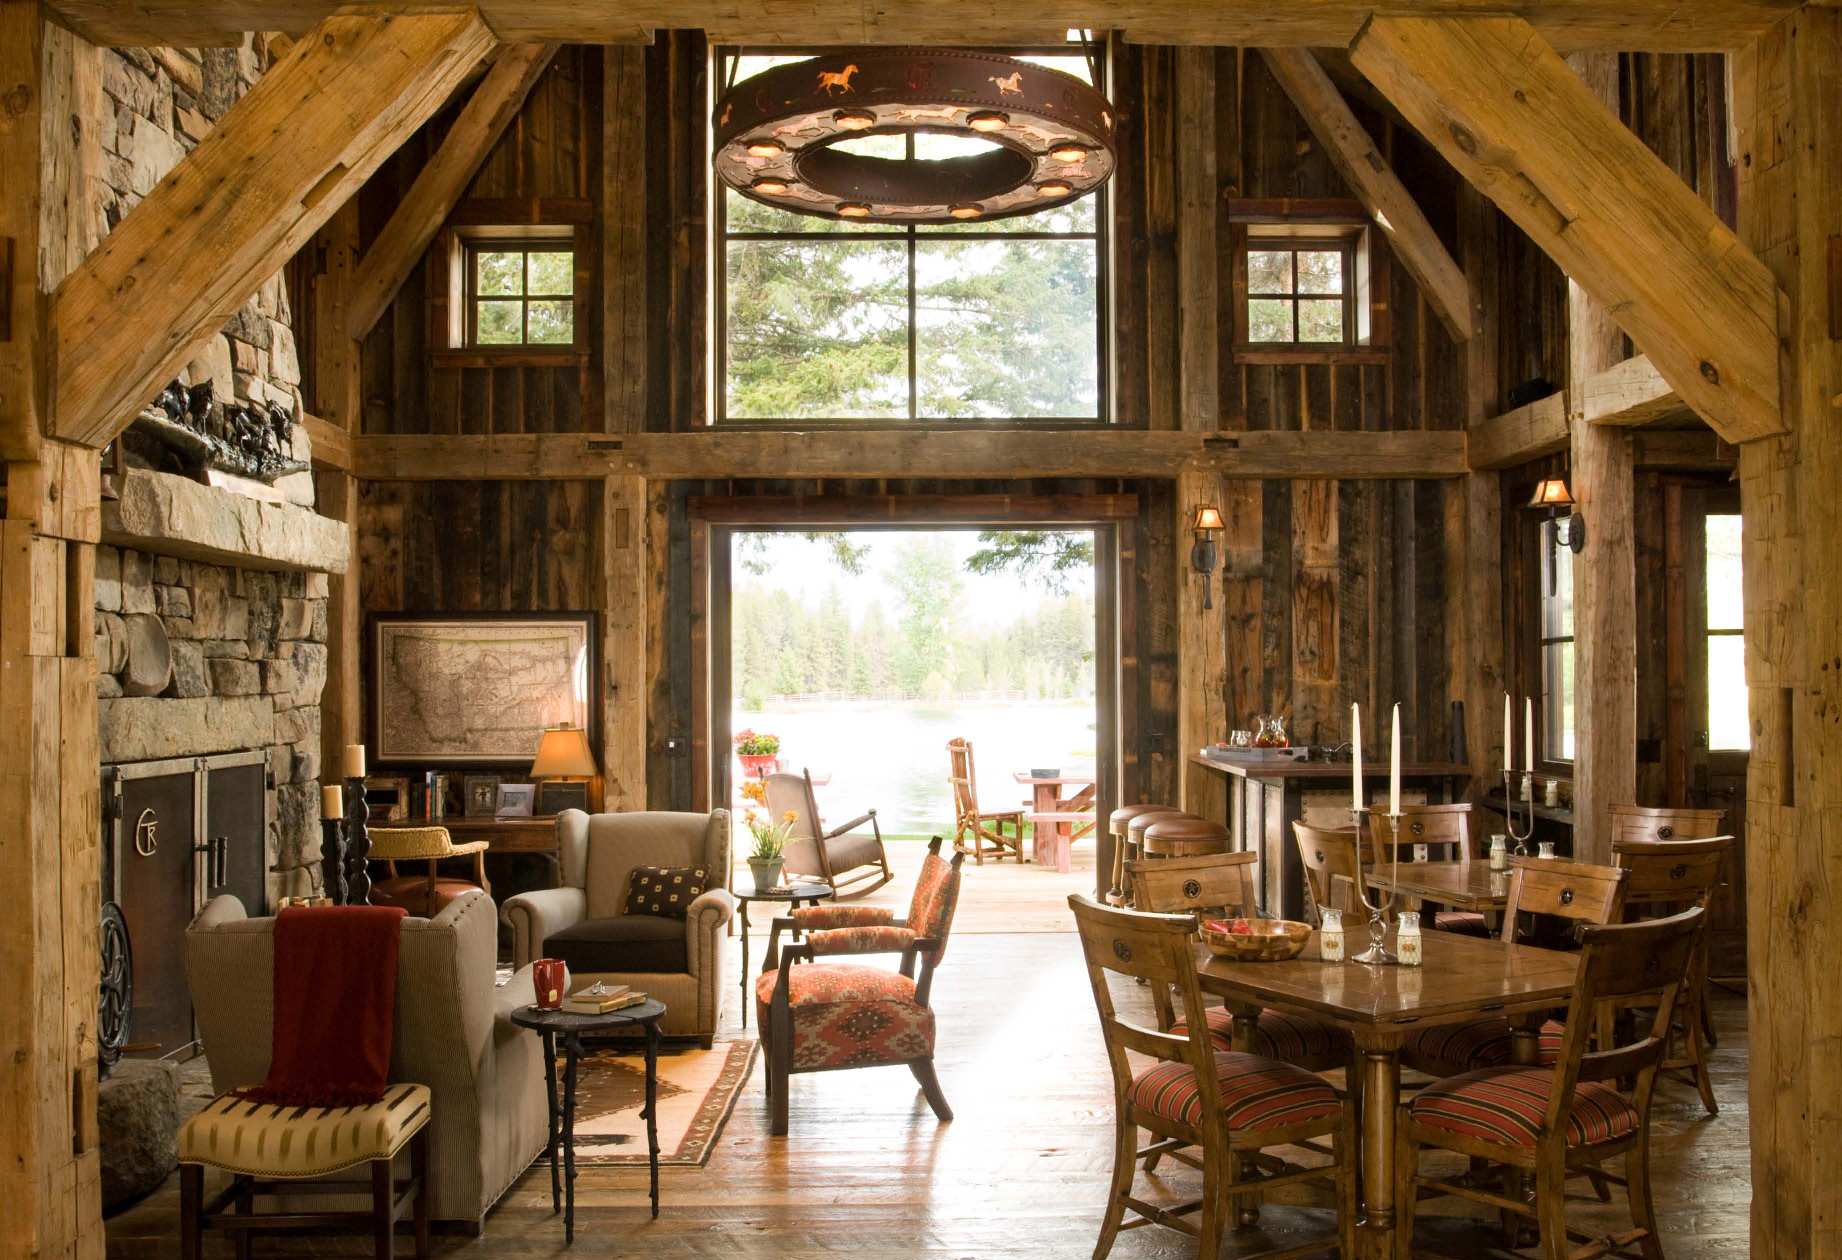 Cabin Decor Rustic, Mountain Home Gift, Cabin Mantel, Barn Style